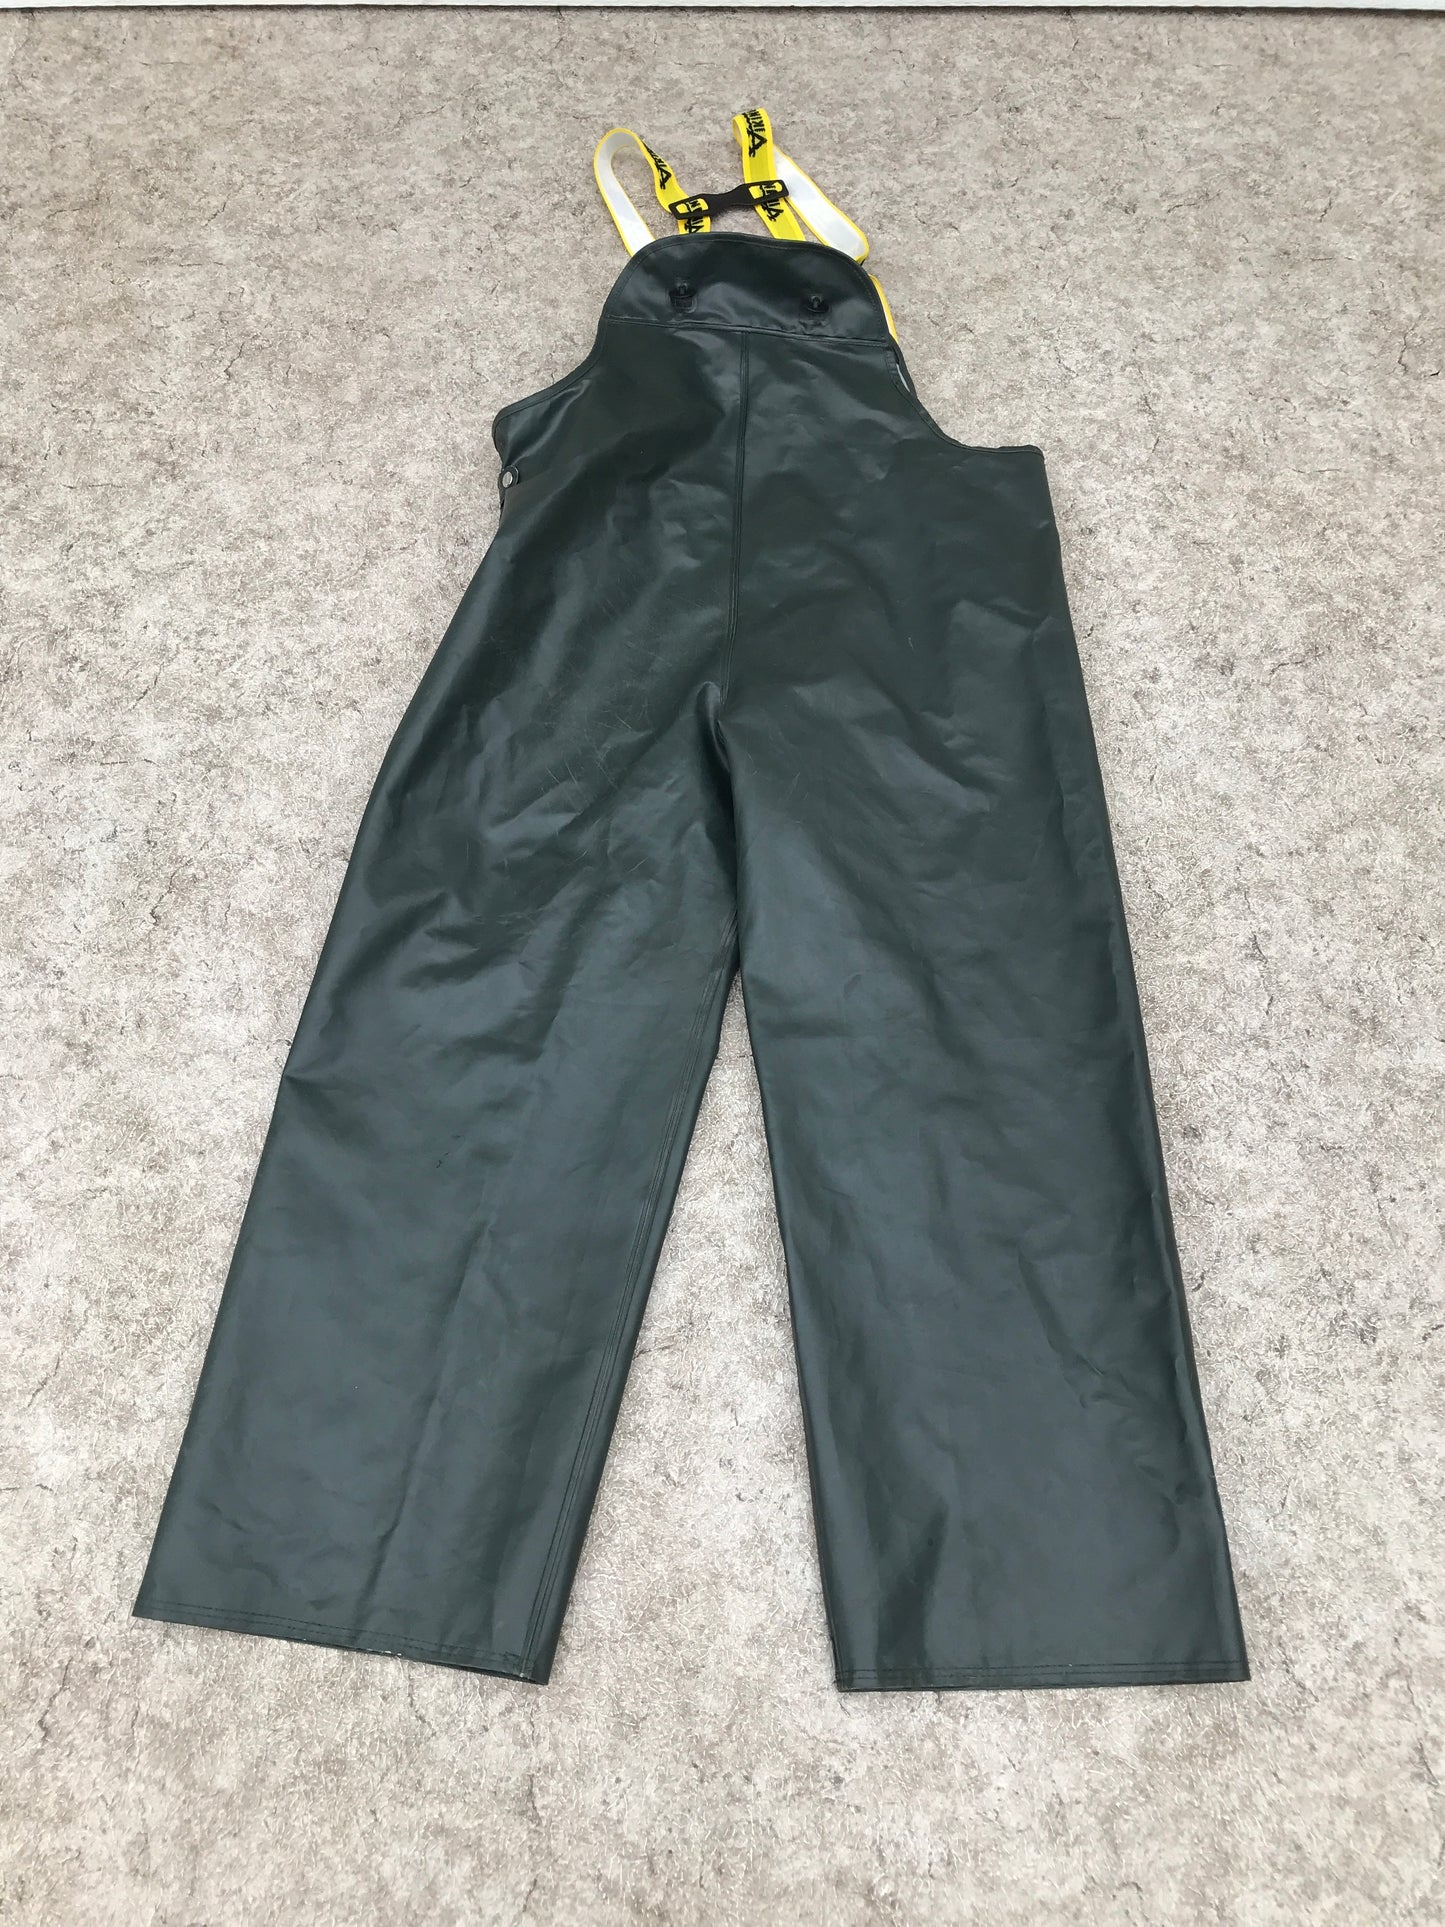 Rain pants men size Large waterproof Viking journeyman 420D with removeable straps